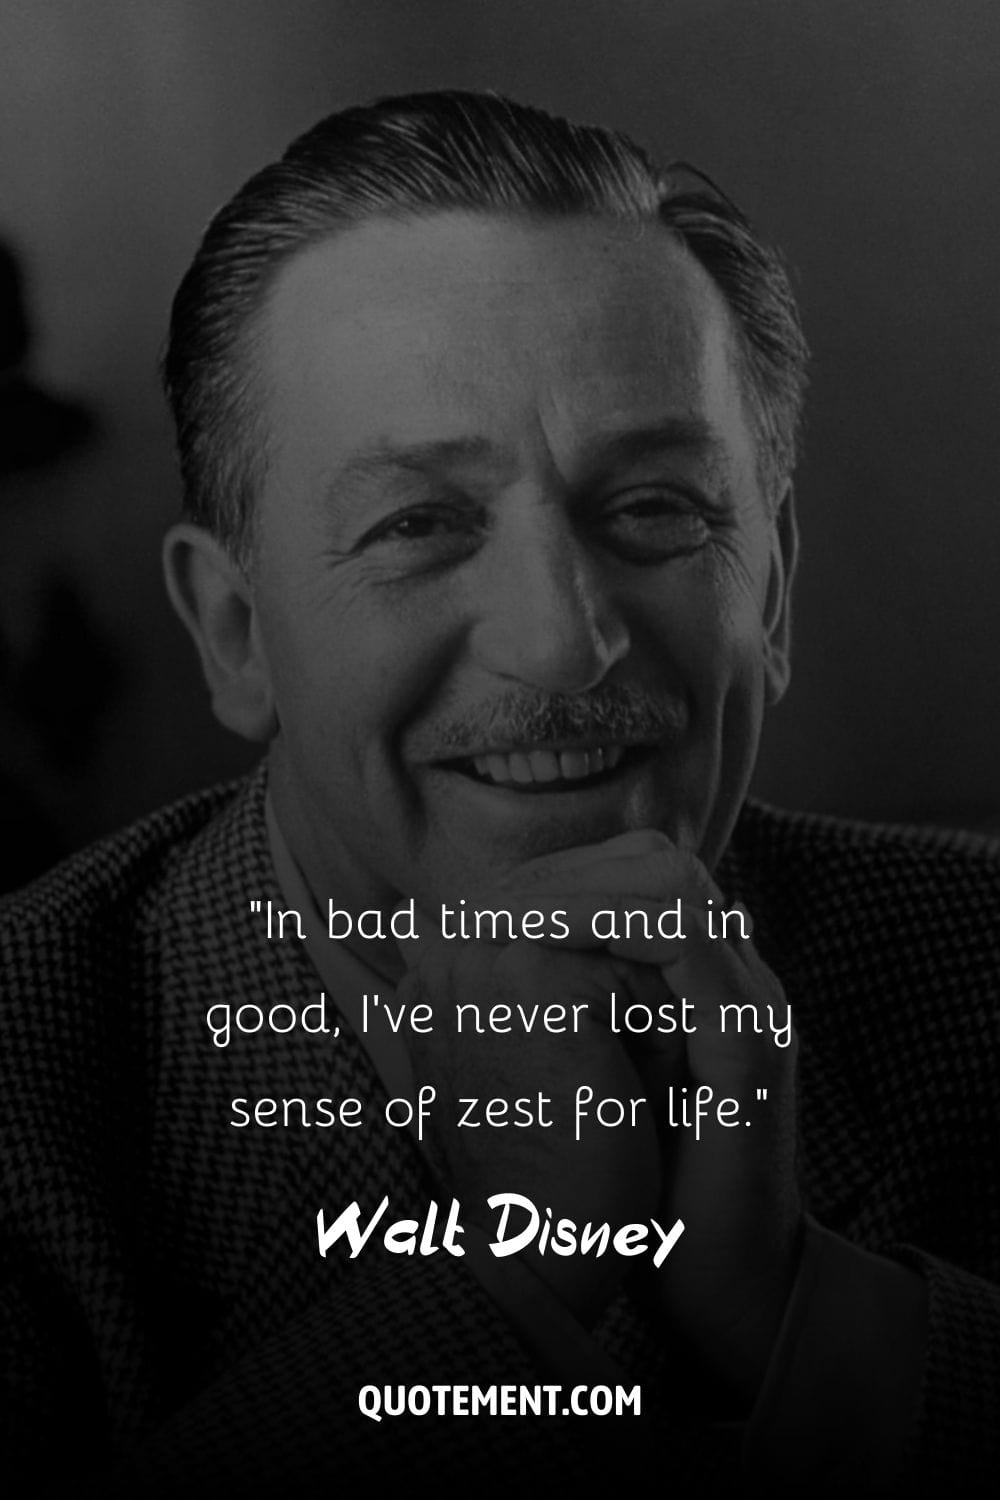 Walt Disney's captivating smile shines in portrait.